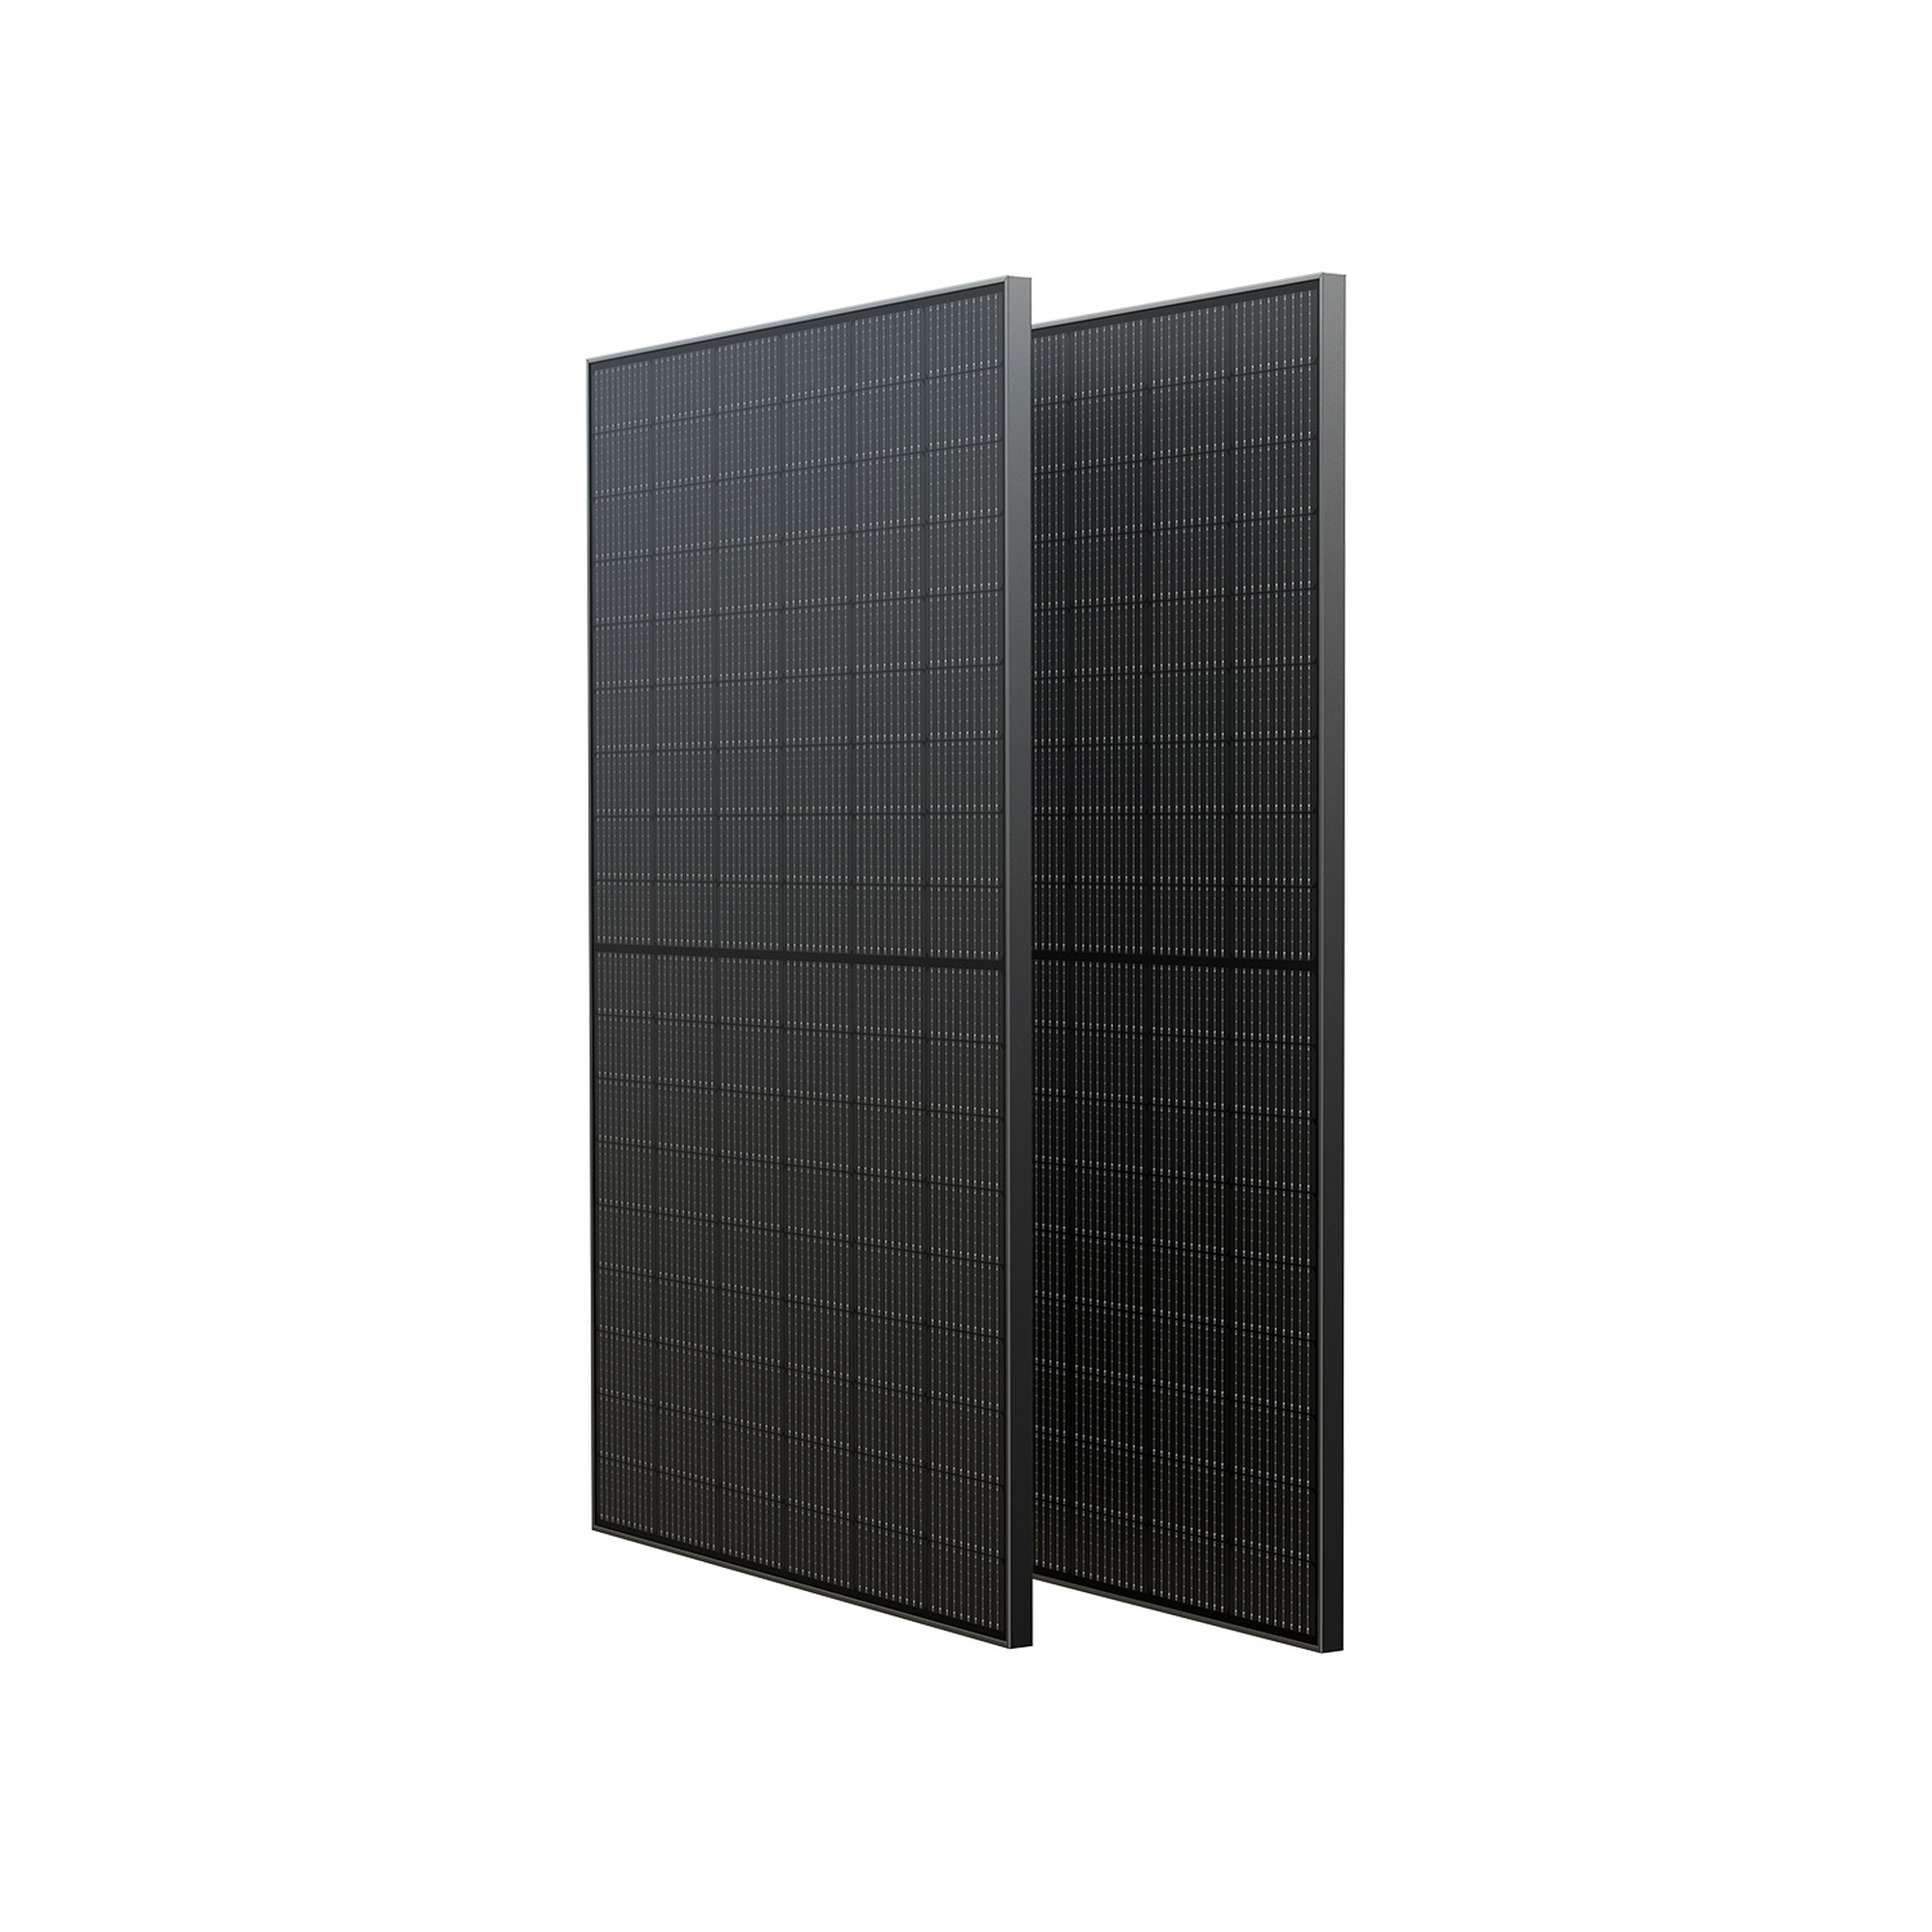 Solarmodule 2 x 400 W starr inklusive 4 Montagefüße + product picture